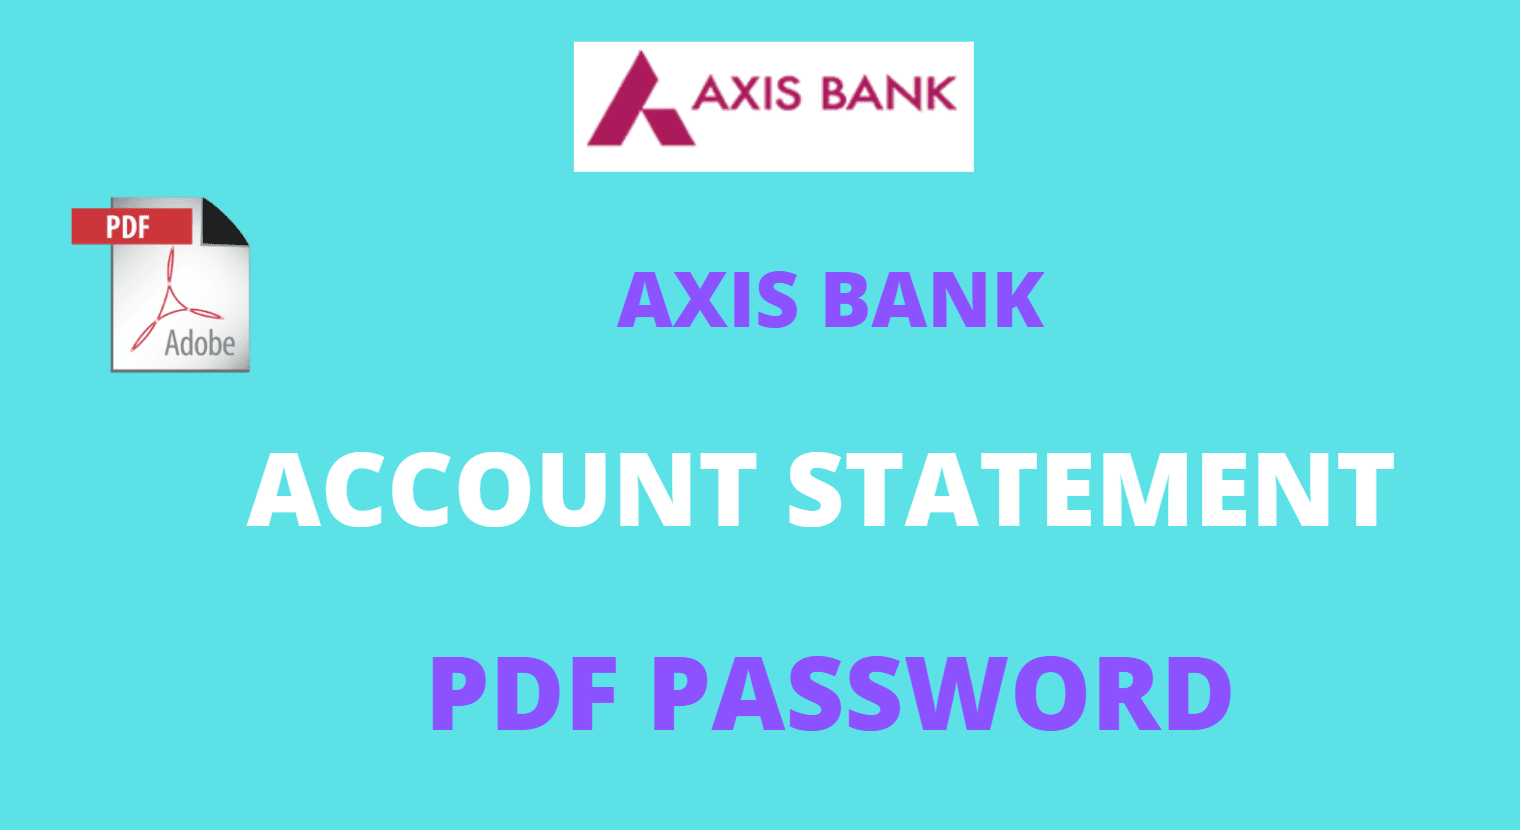 axis bank pdf password